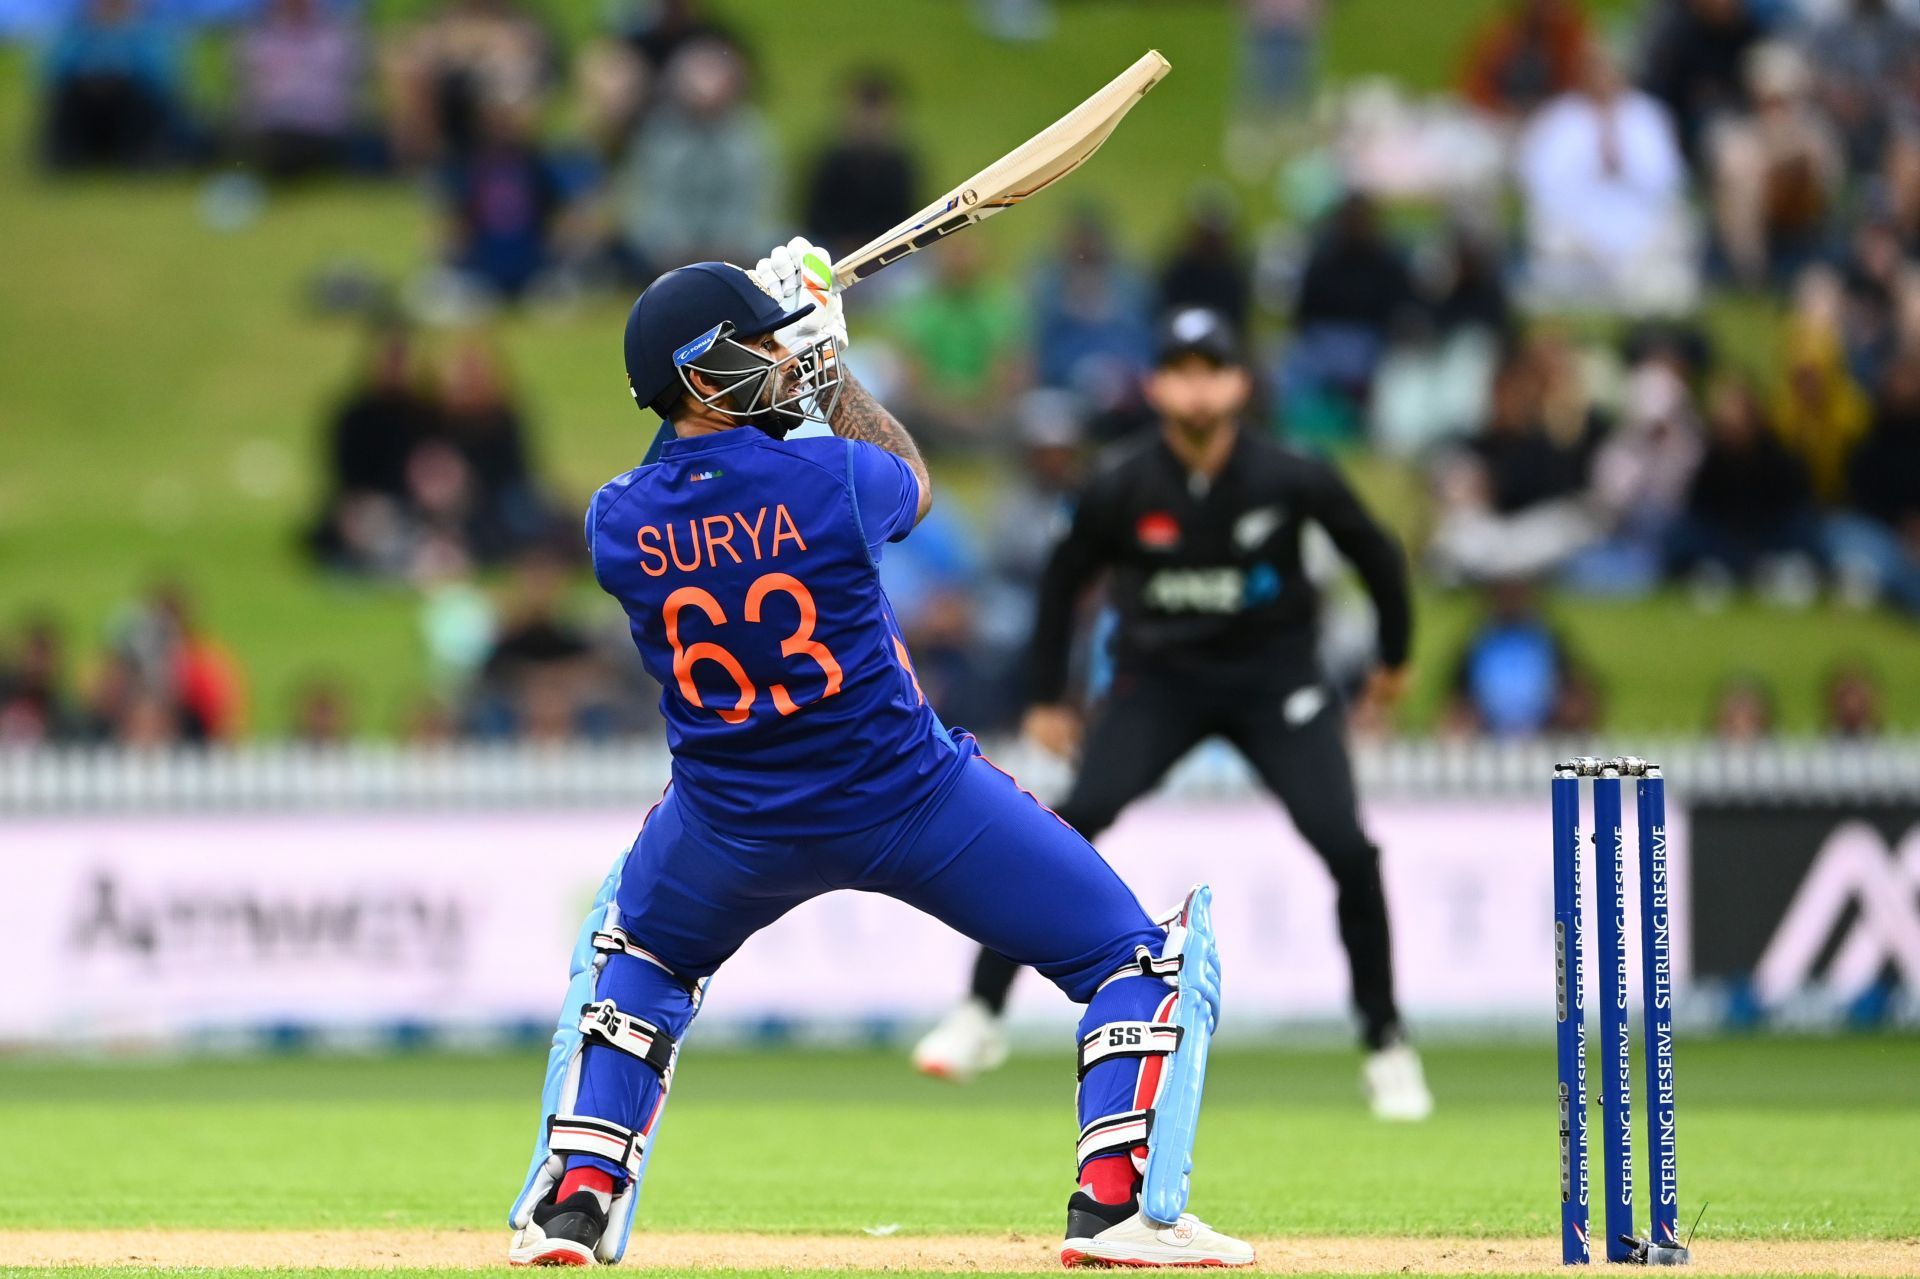 Suryakumar Yadav scored two centuries in T20Is in 2022